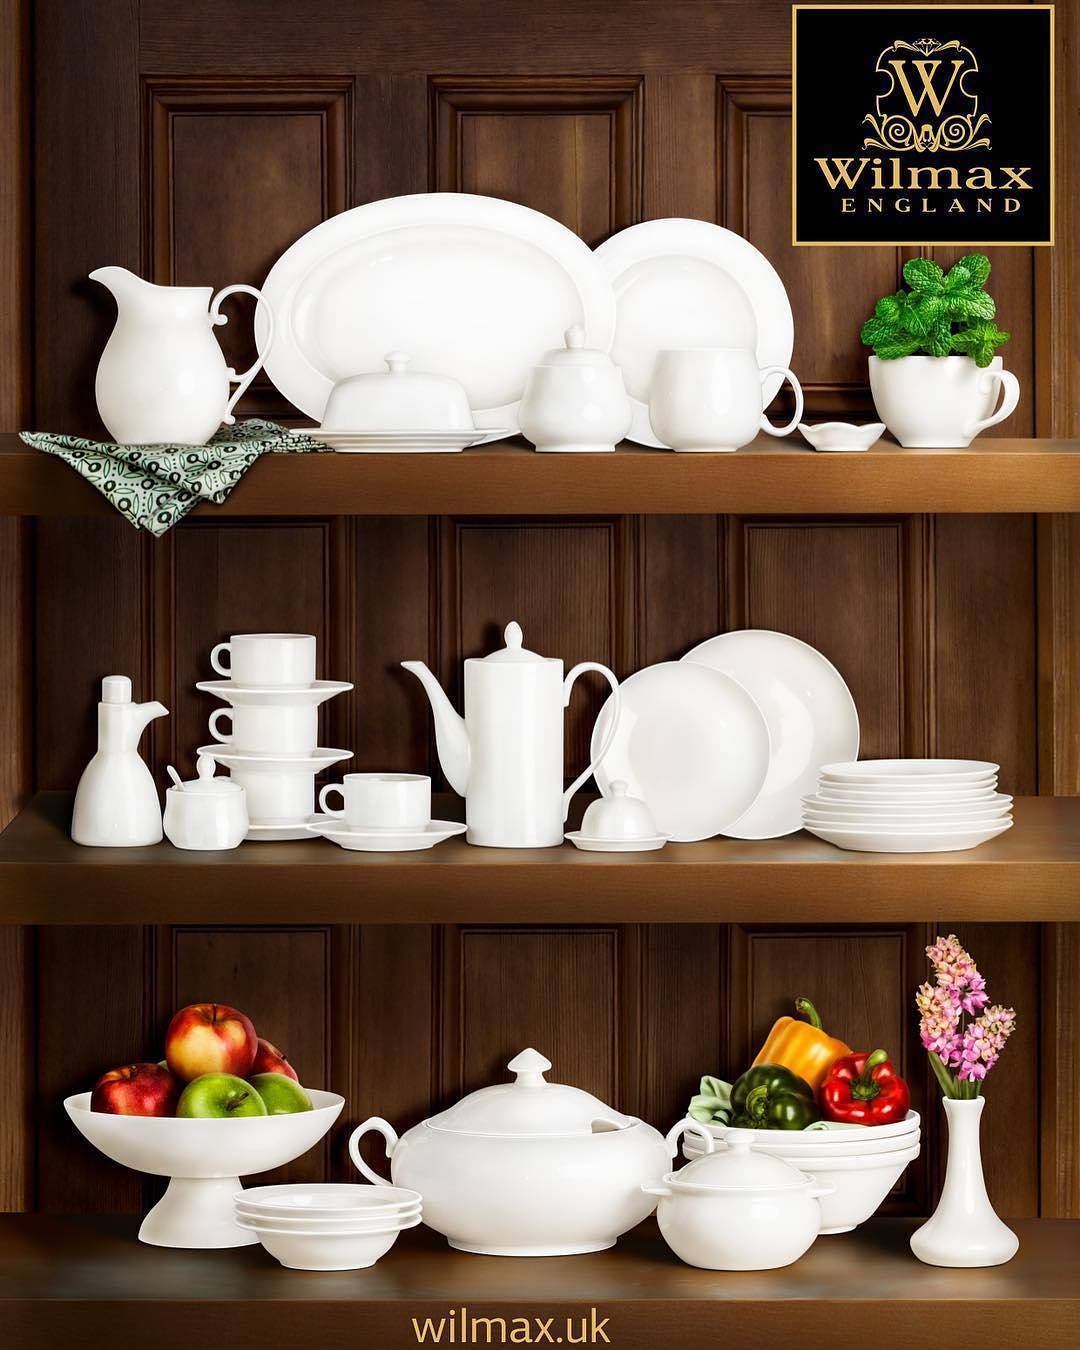 Wilmax Fine Porcelain Rectangular Platter 9.5" X 5"| 24 X 12 Cm SKU: WL-992645/A